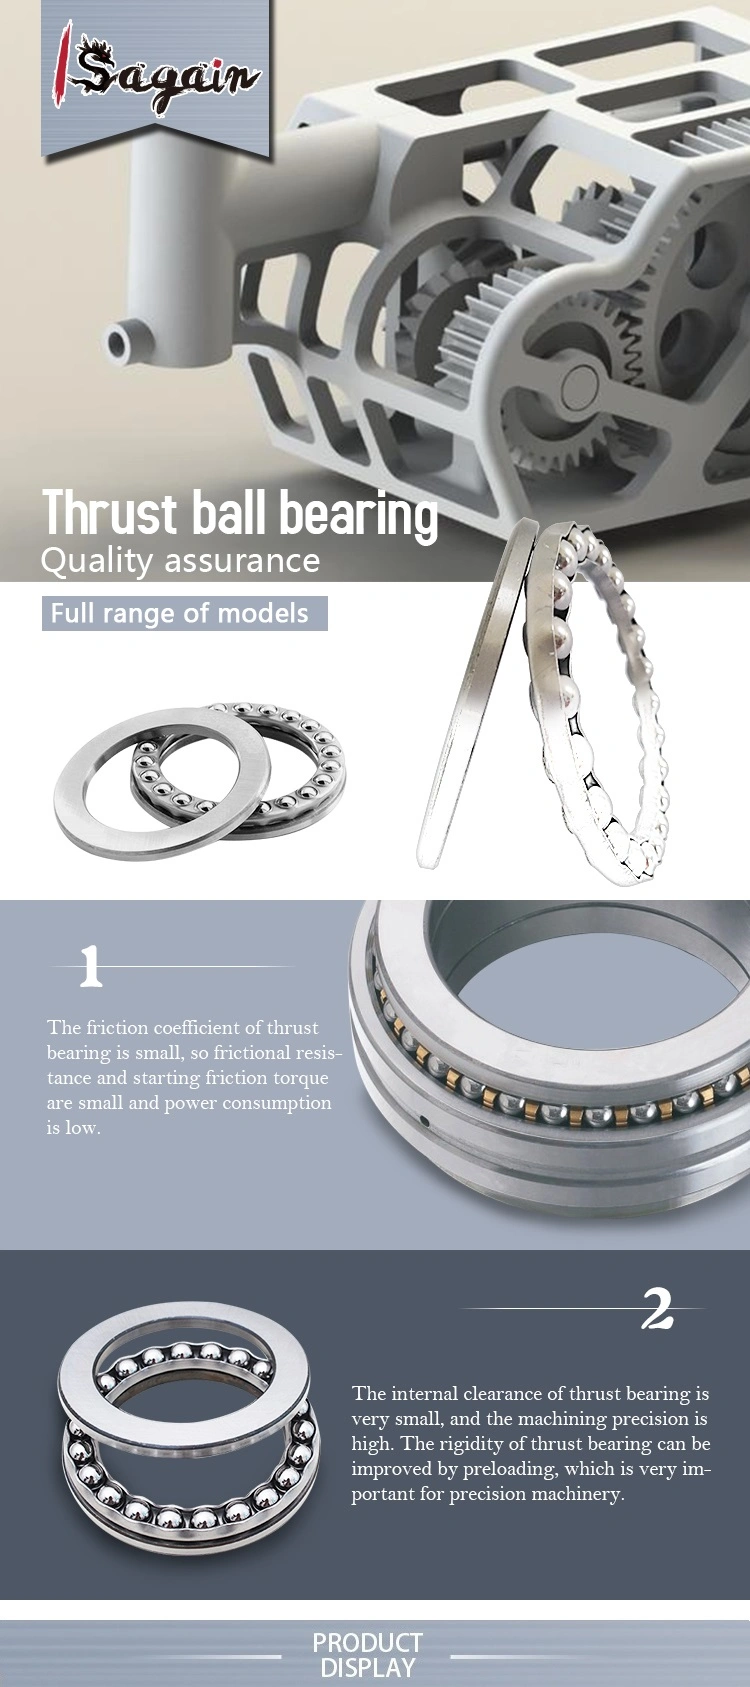 Stainless/Gcr Chrome/Carbon Steel Ball Bearing 51100, 51200 Series Thrust Ball Bearing